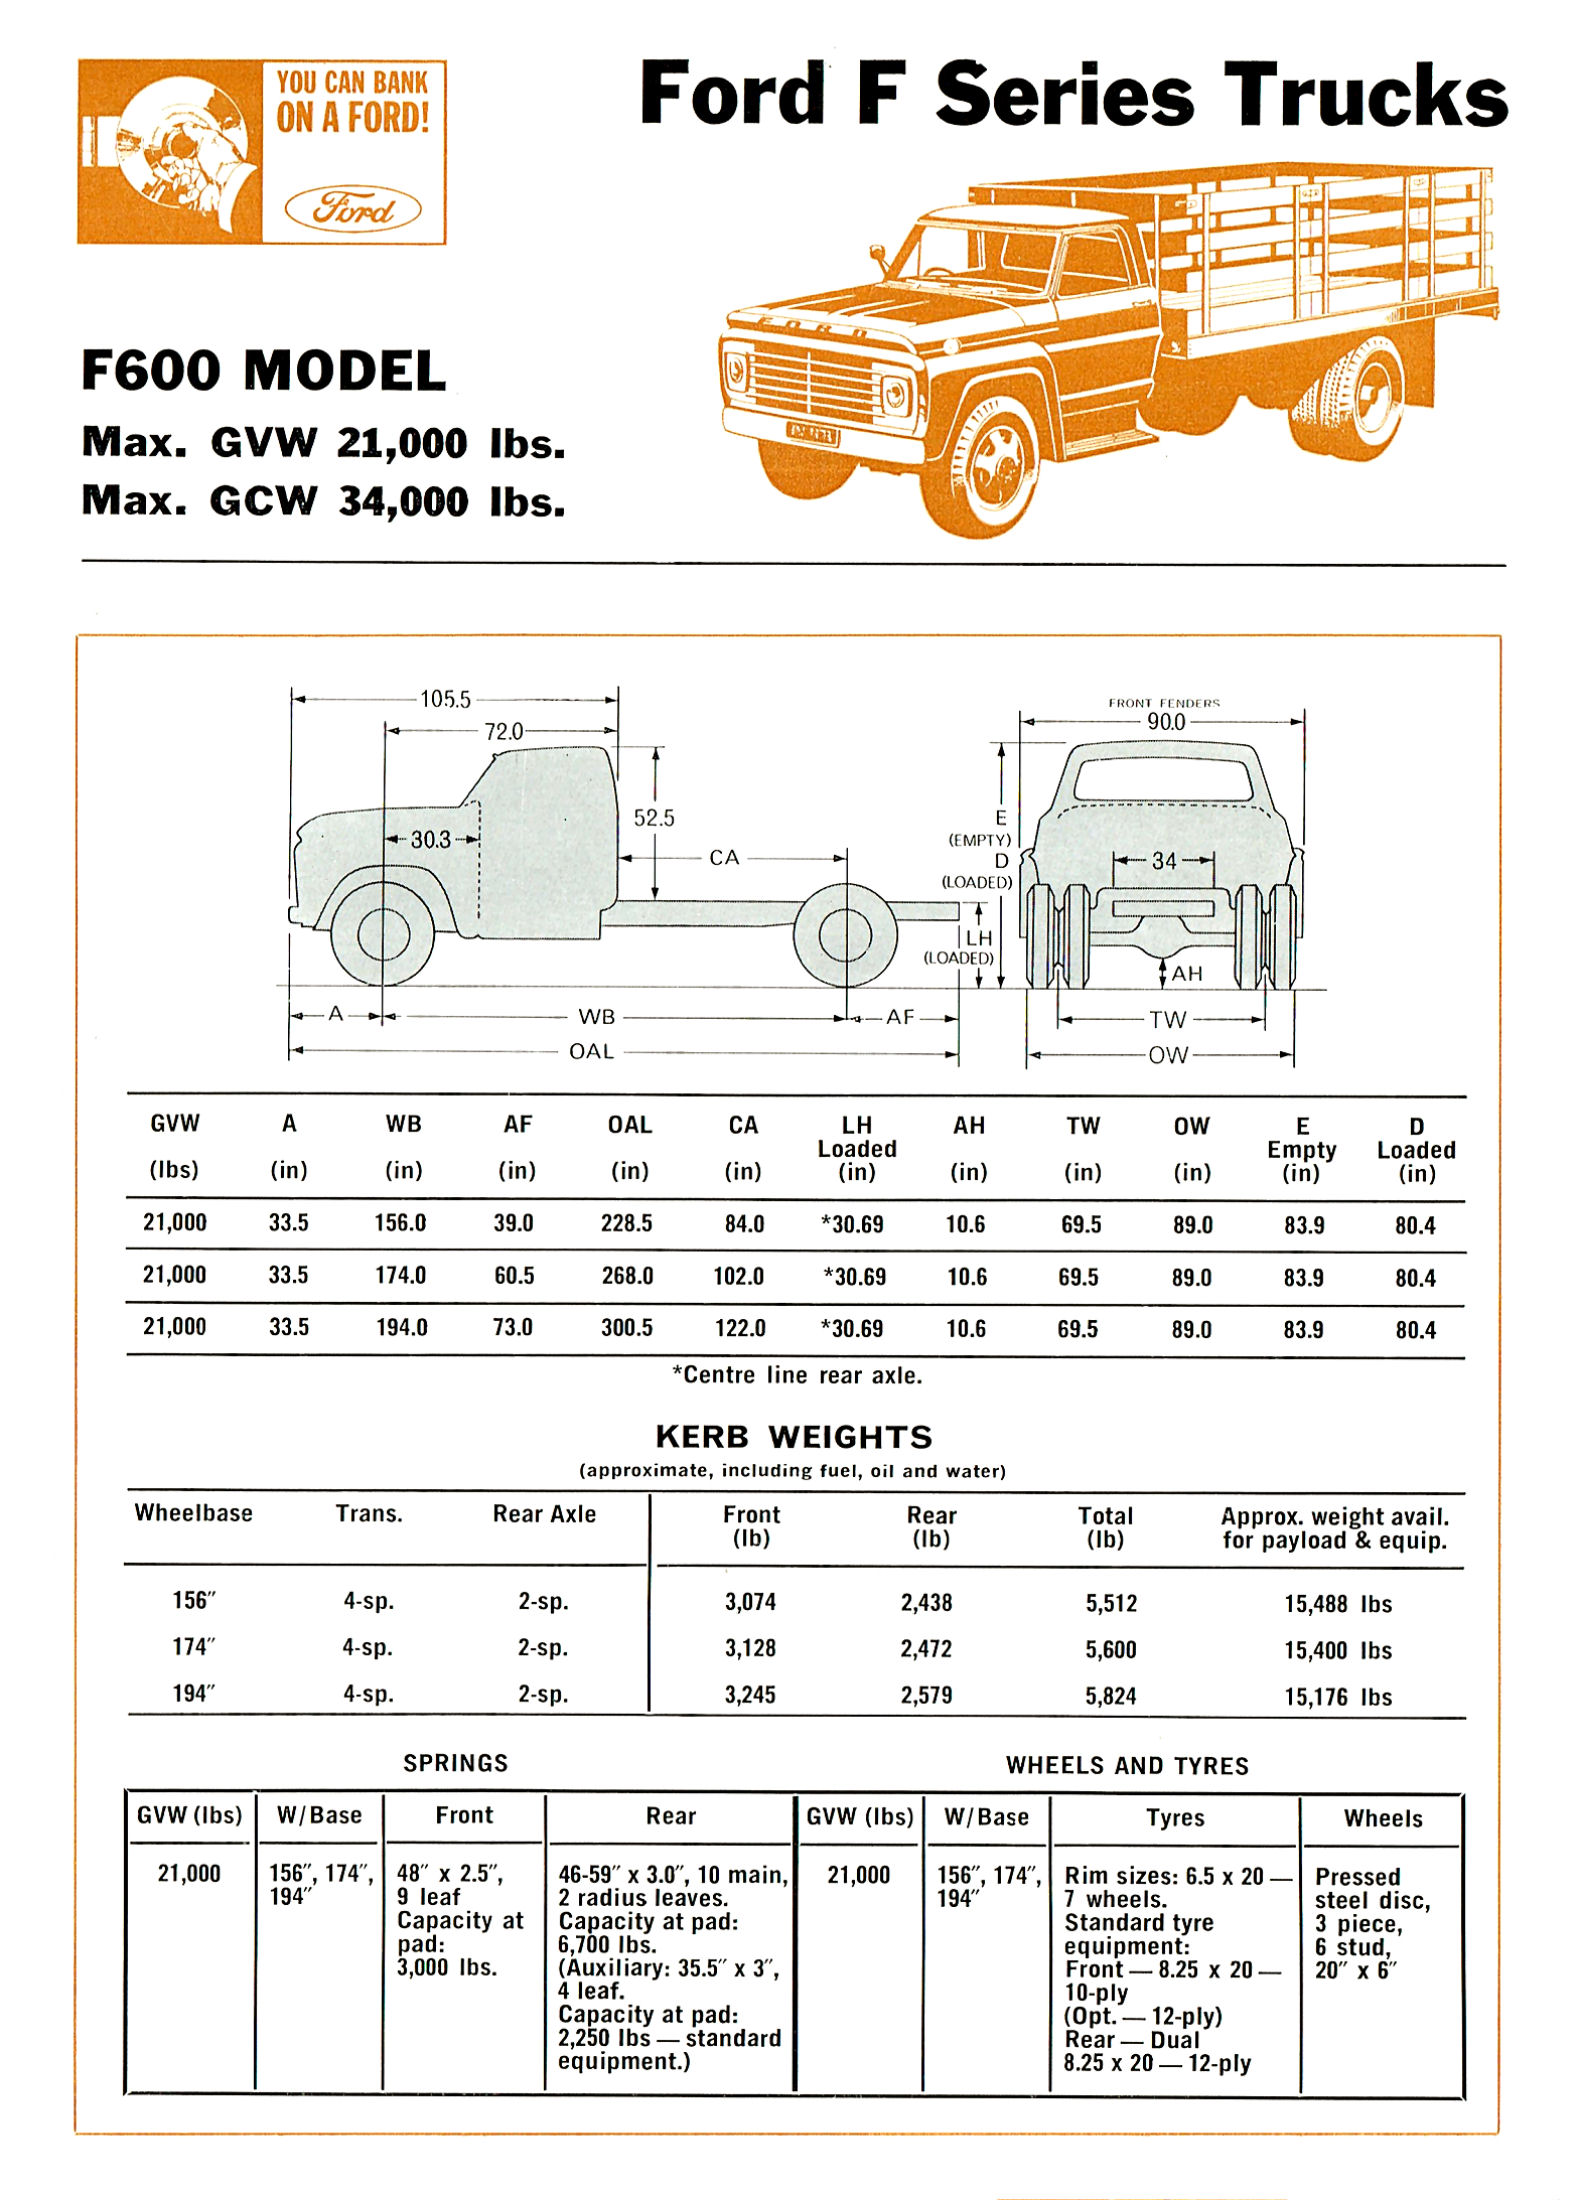 1967 Ford F Series Trucks (Aus)-i03a.jpg-2022-12-7 13.22.40